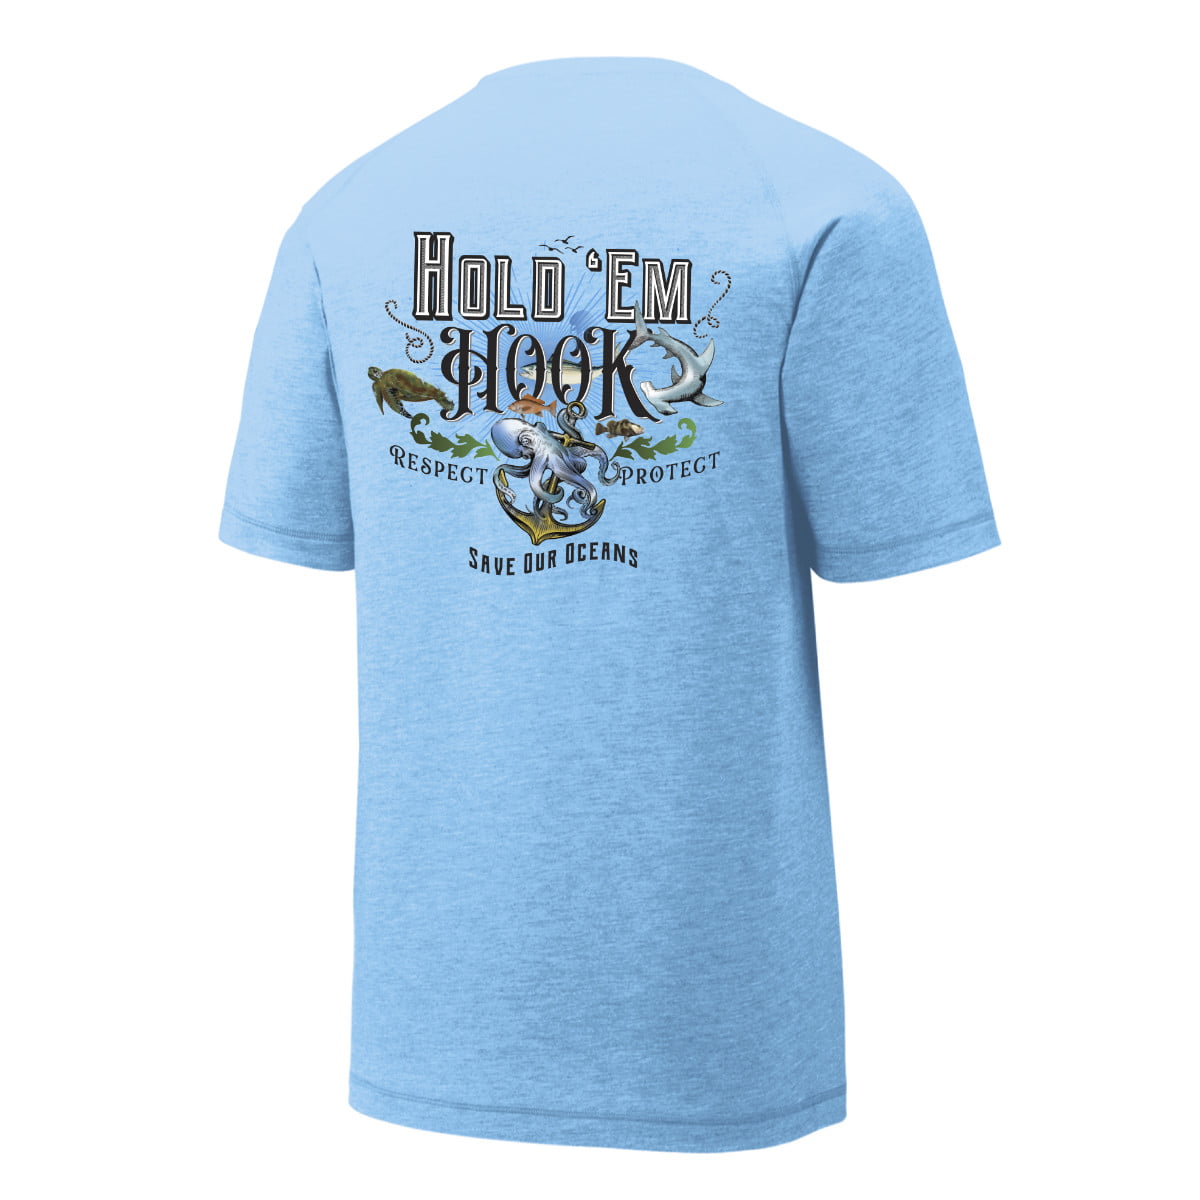 Save Our Oceans T-Shirt - Hold 'em Hook